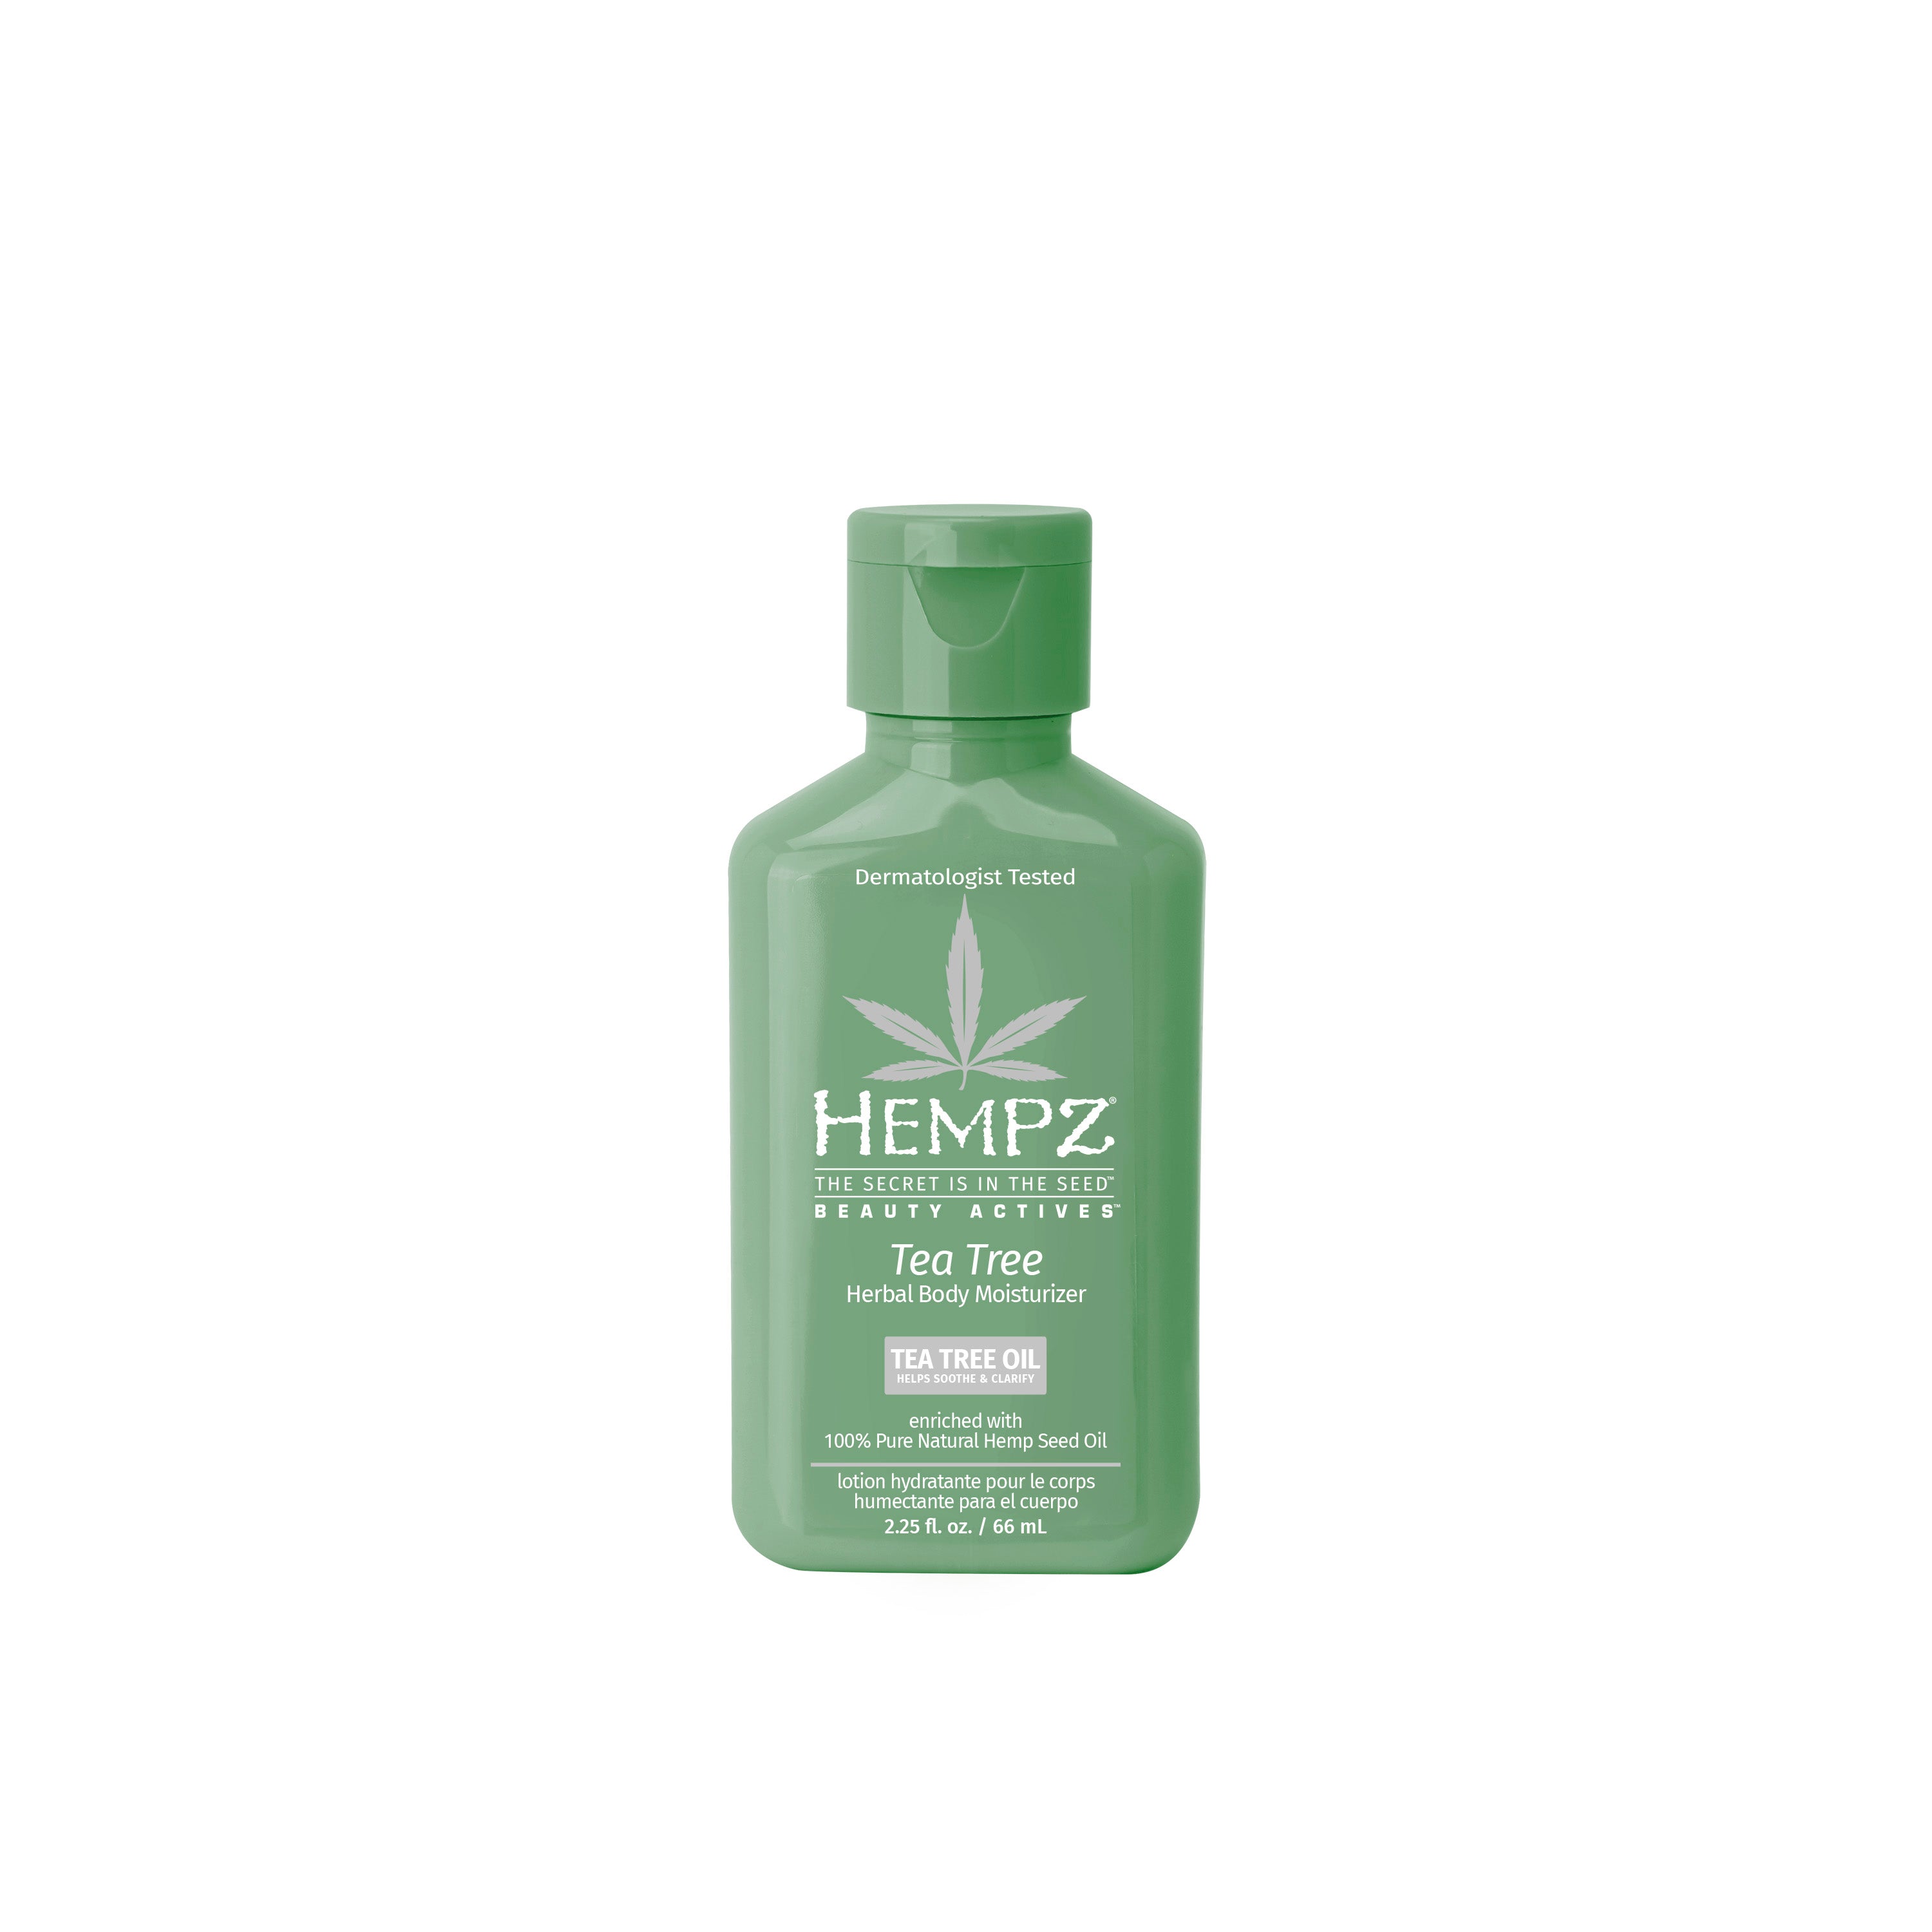 Hempz - Tea Tree Herbal Body Moisturizer - Creata Beauty - Professional Beauty Products